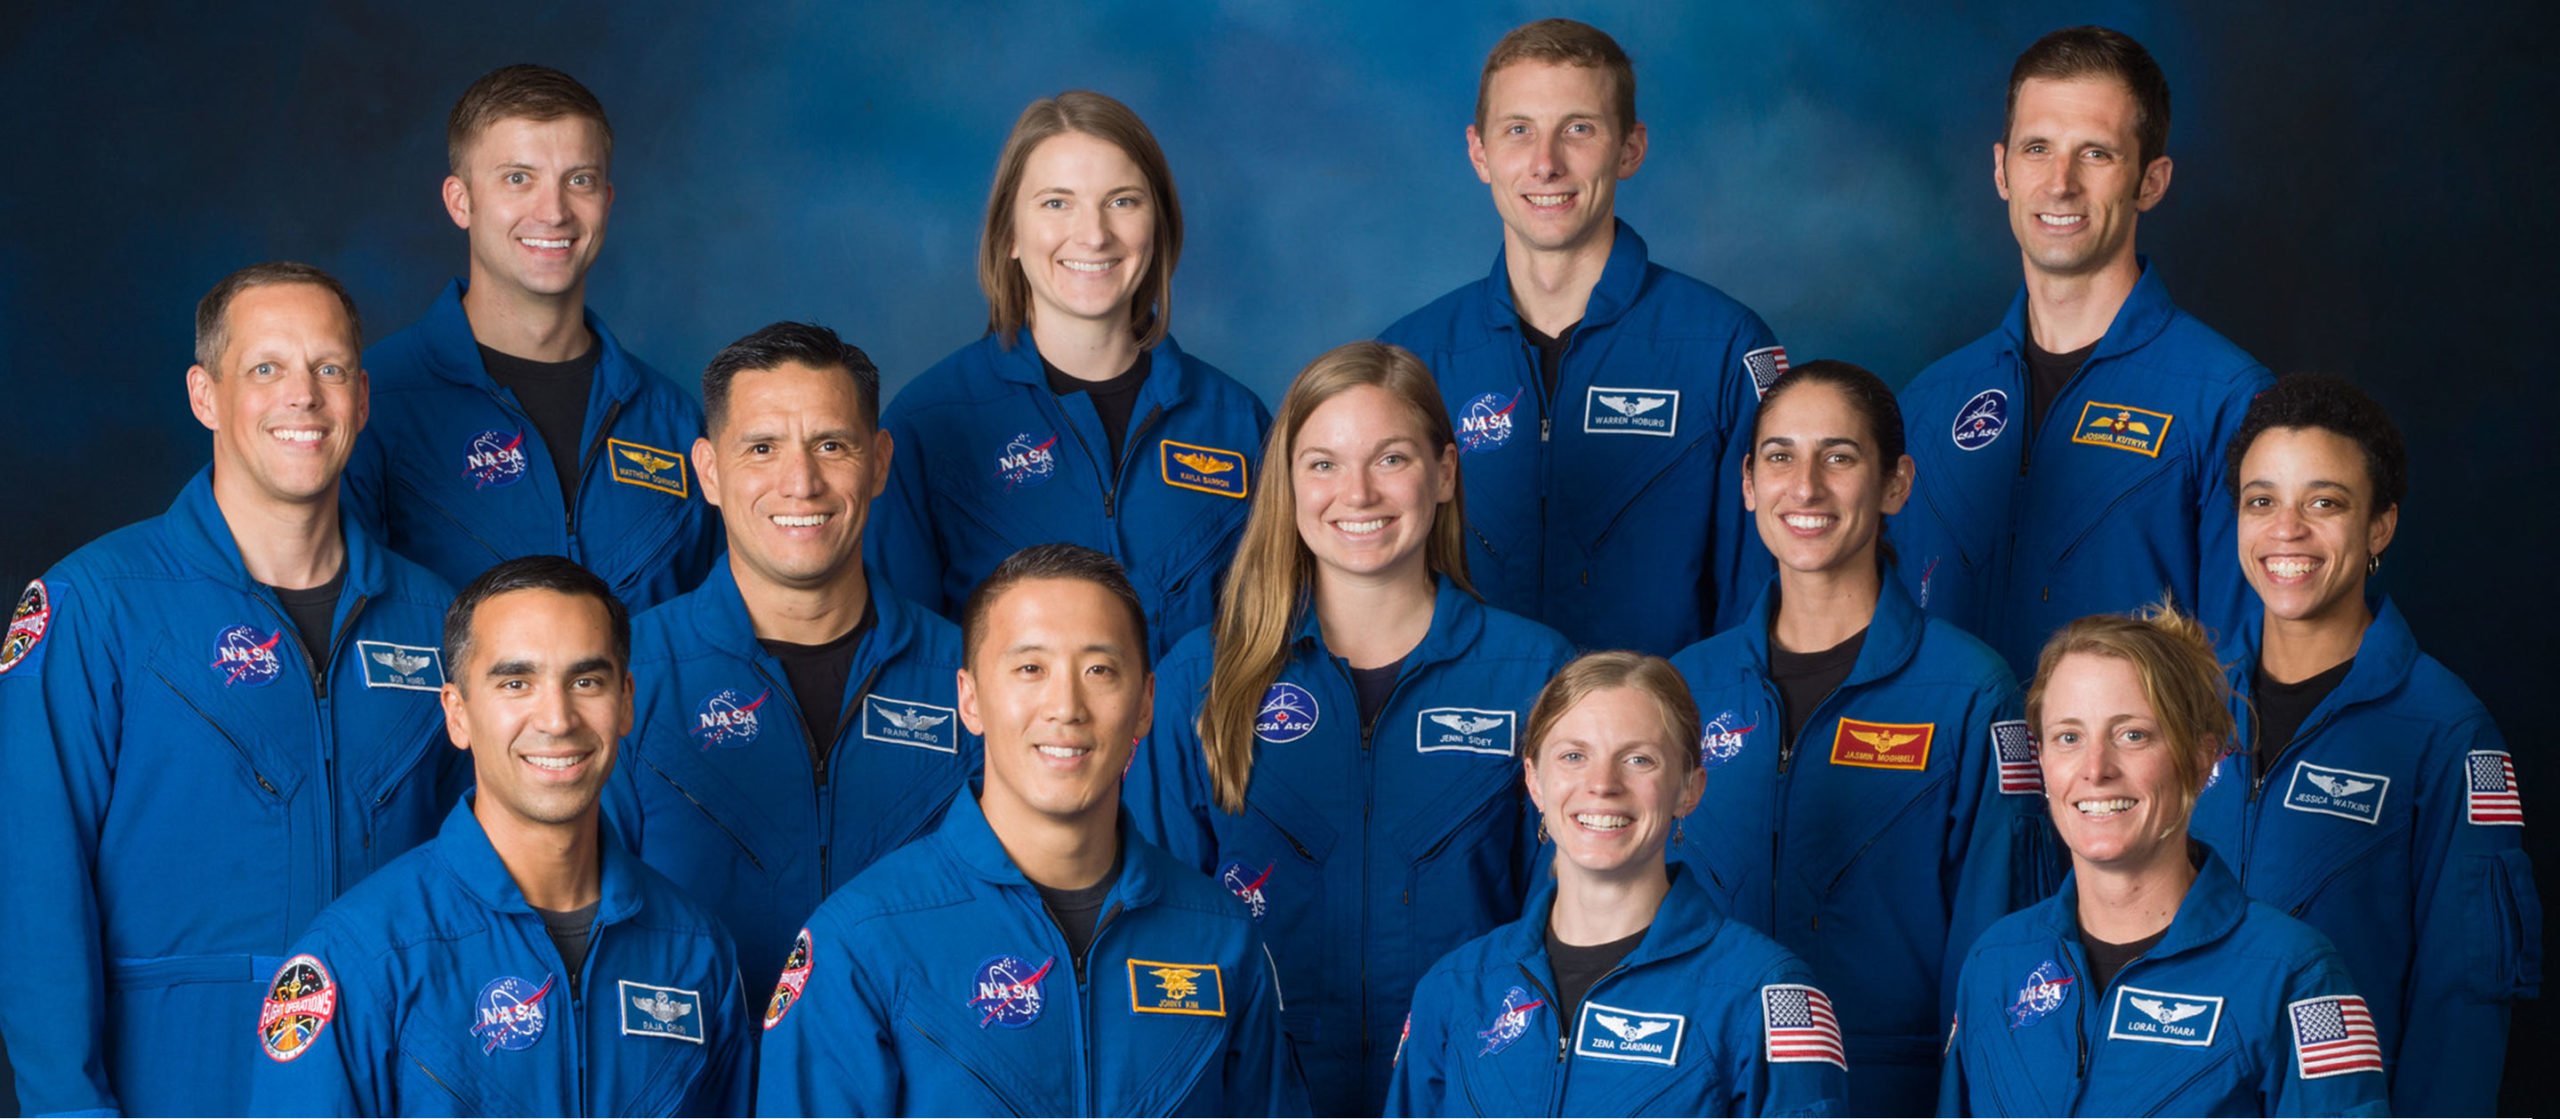 NASA Astronaut Group 22